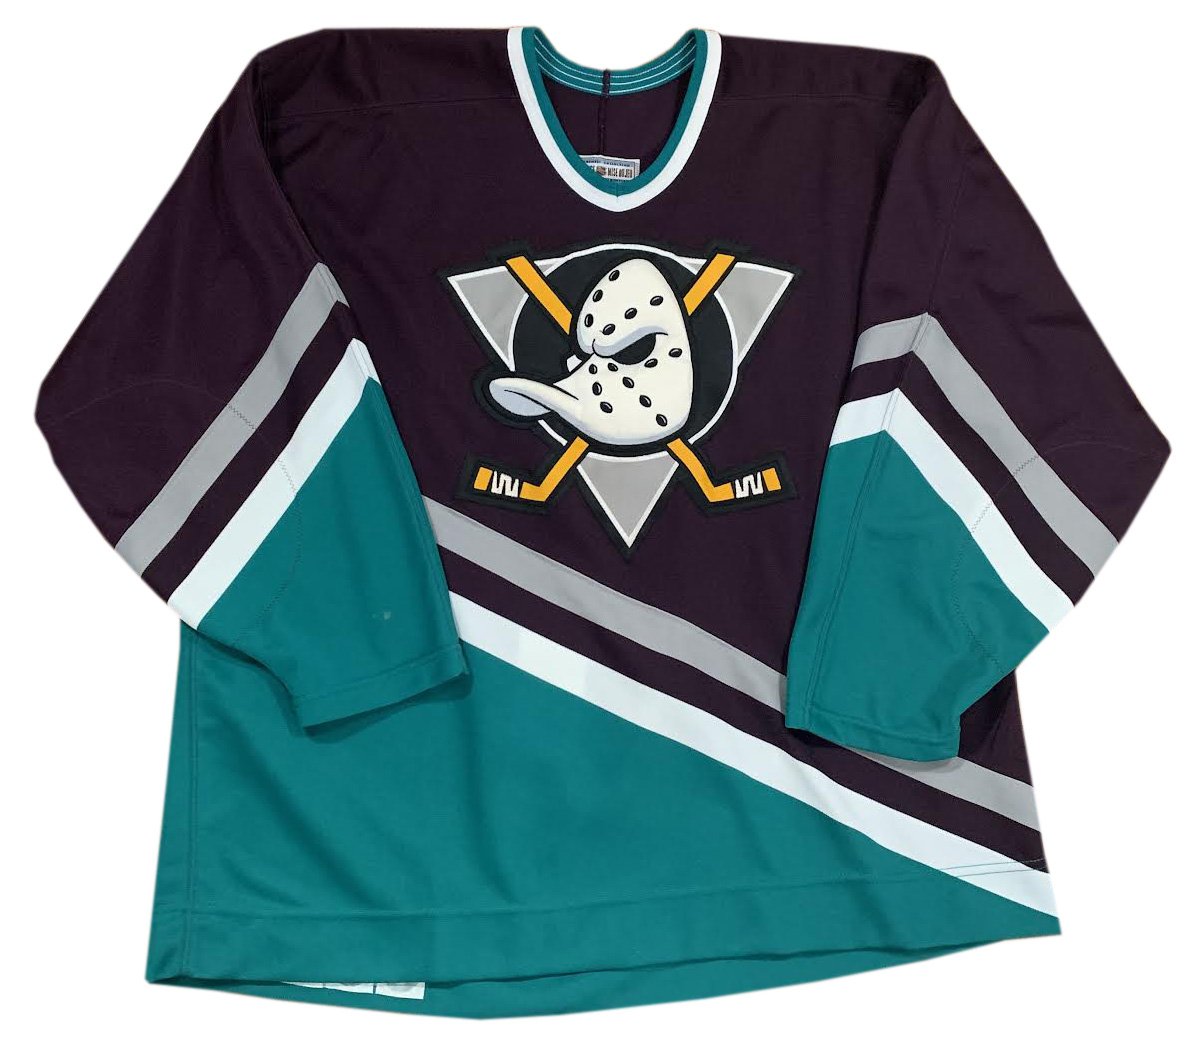 Buy Vintage 1990s Anaheim Ducks NHL CCM Hockey Jersey / 90s Jersey Online  in India 